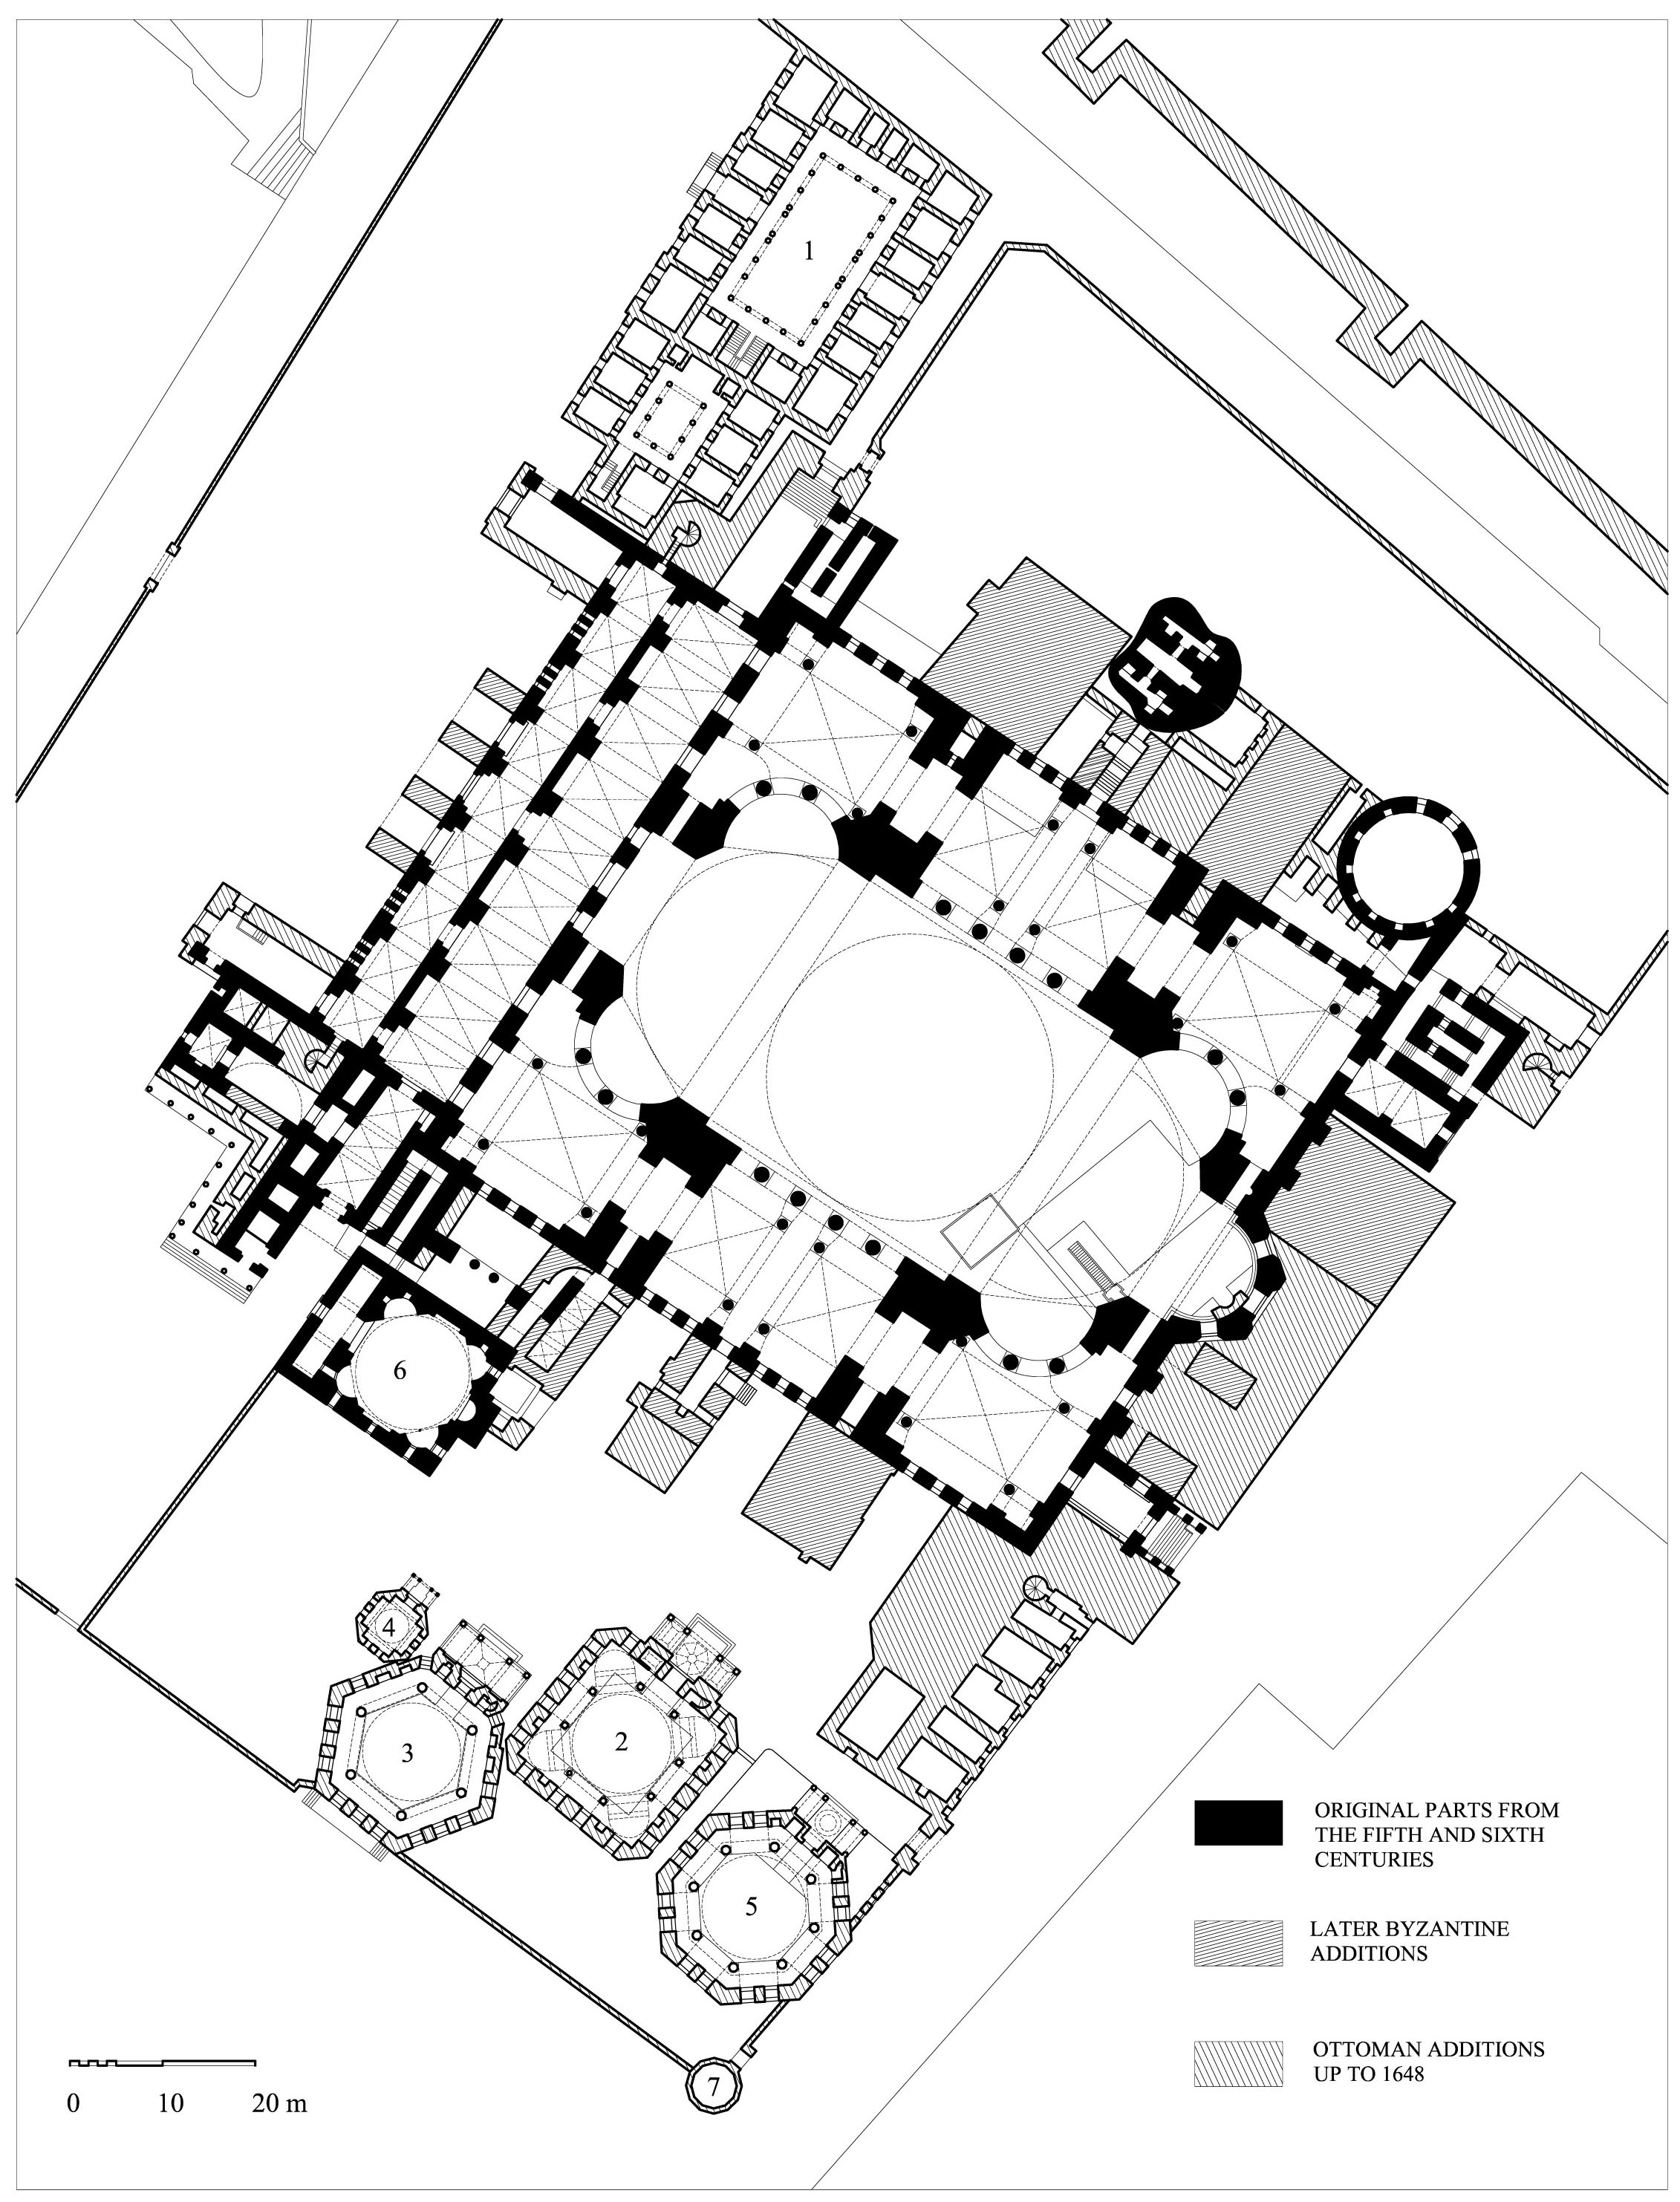 Floor plan of Hagia Sophia